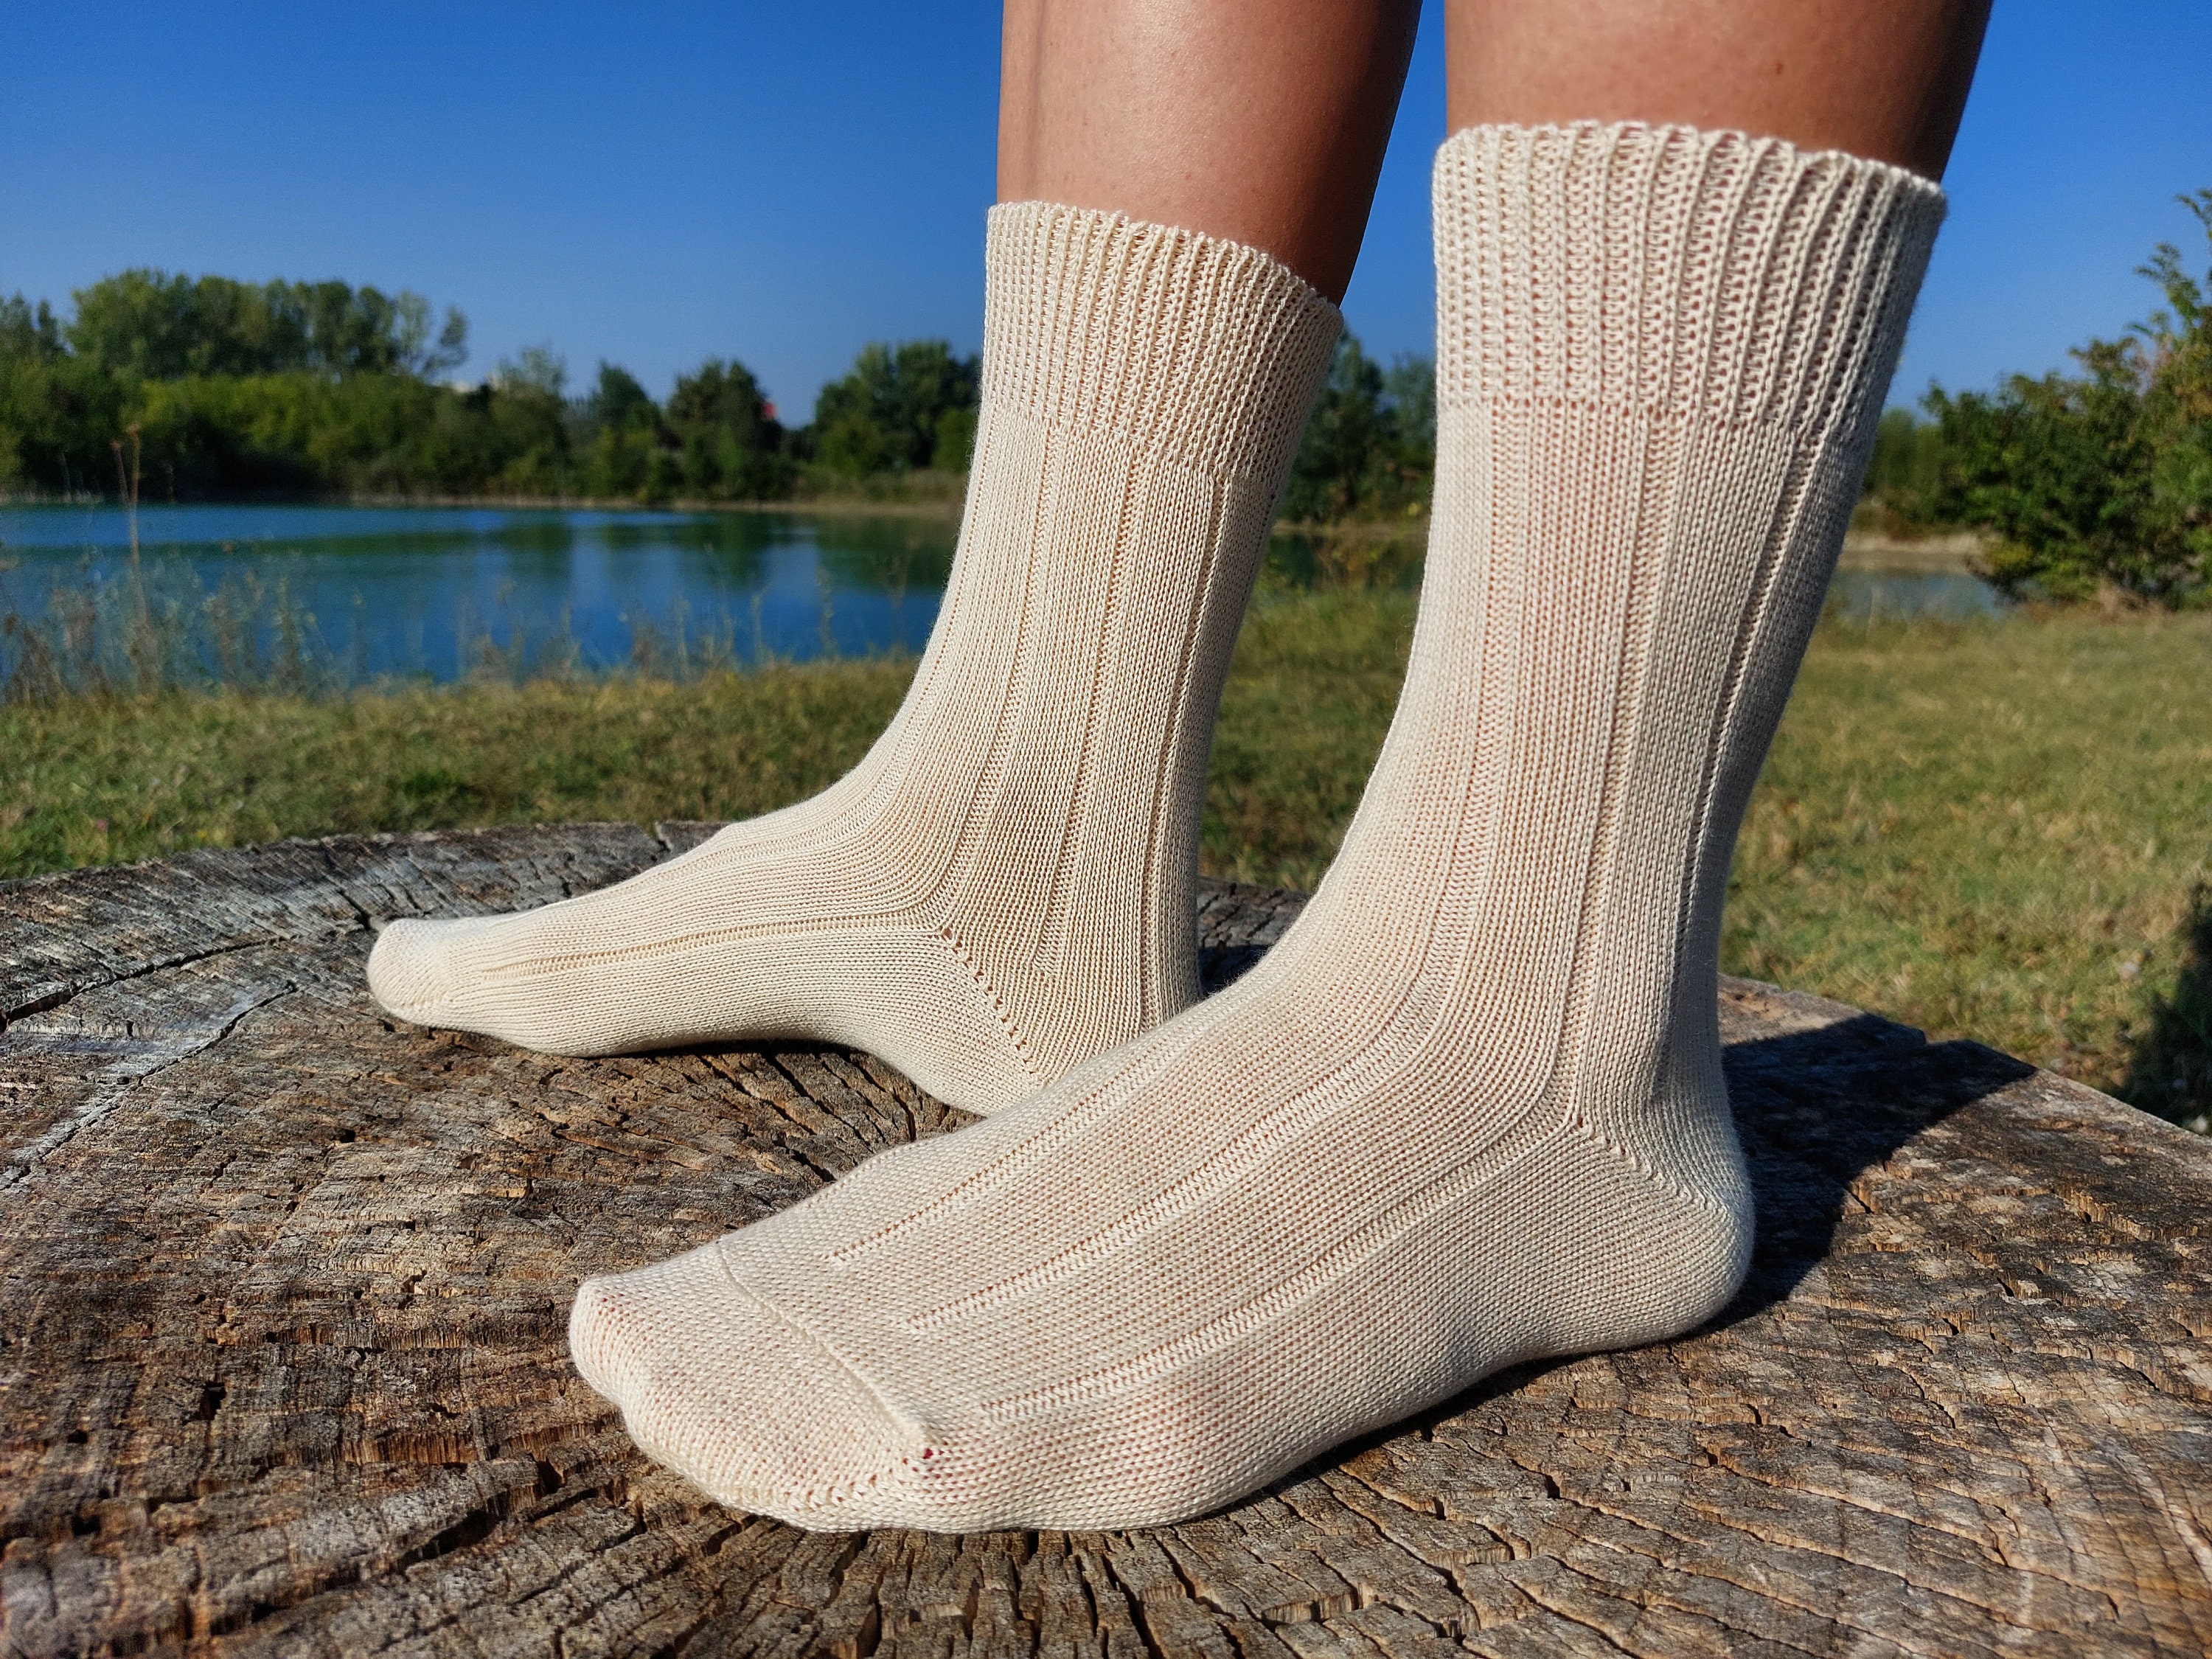 6 Pack Mens 100% Cotton Non Elastic/Binding Summer Dress Socks for  Circulation